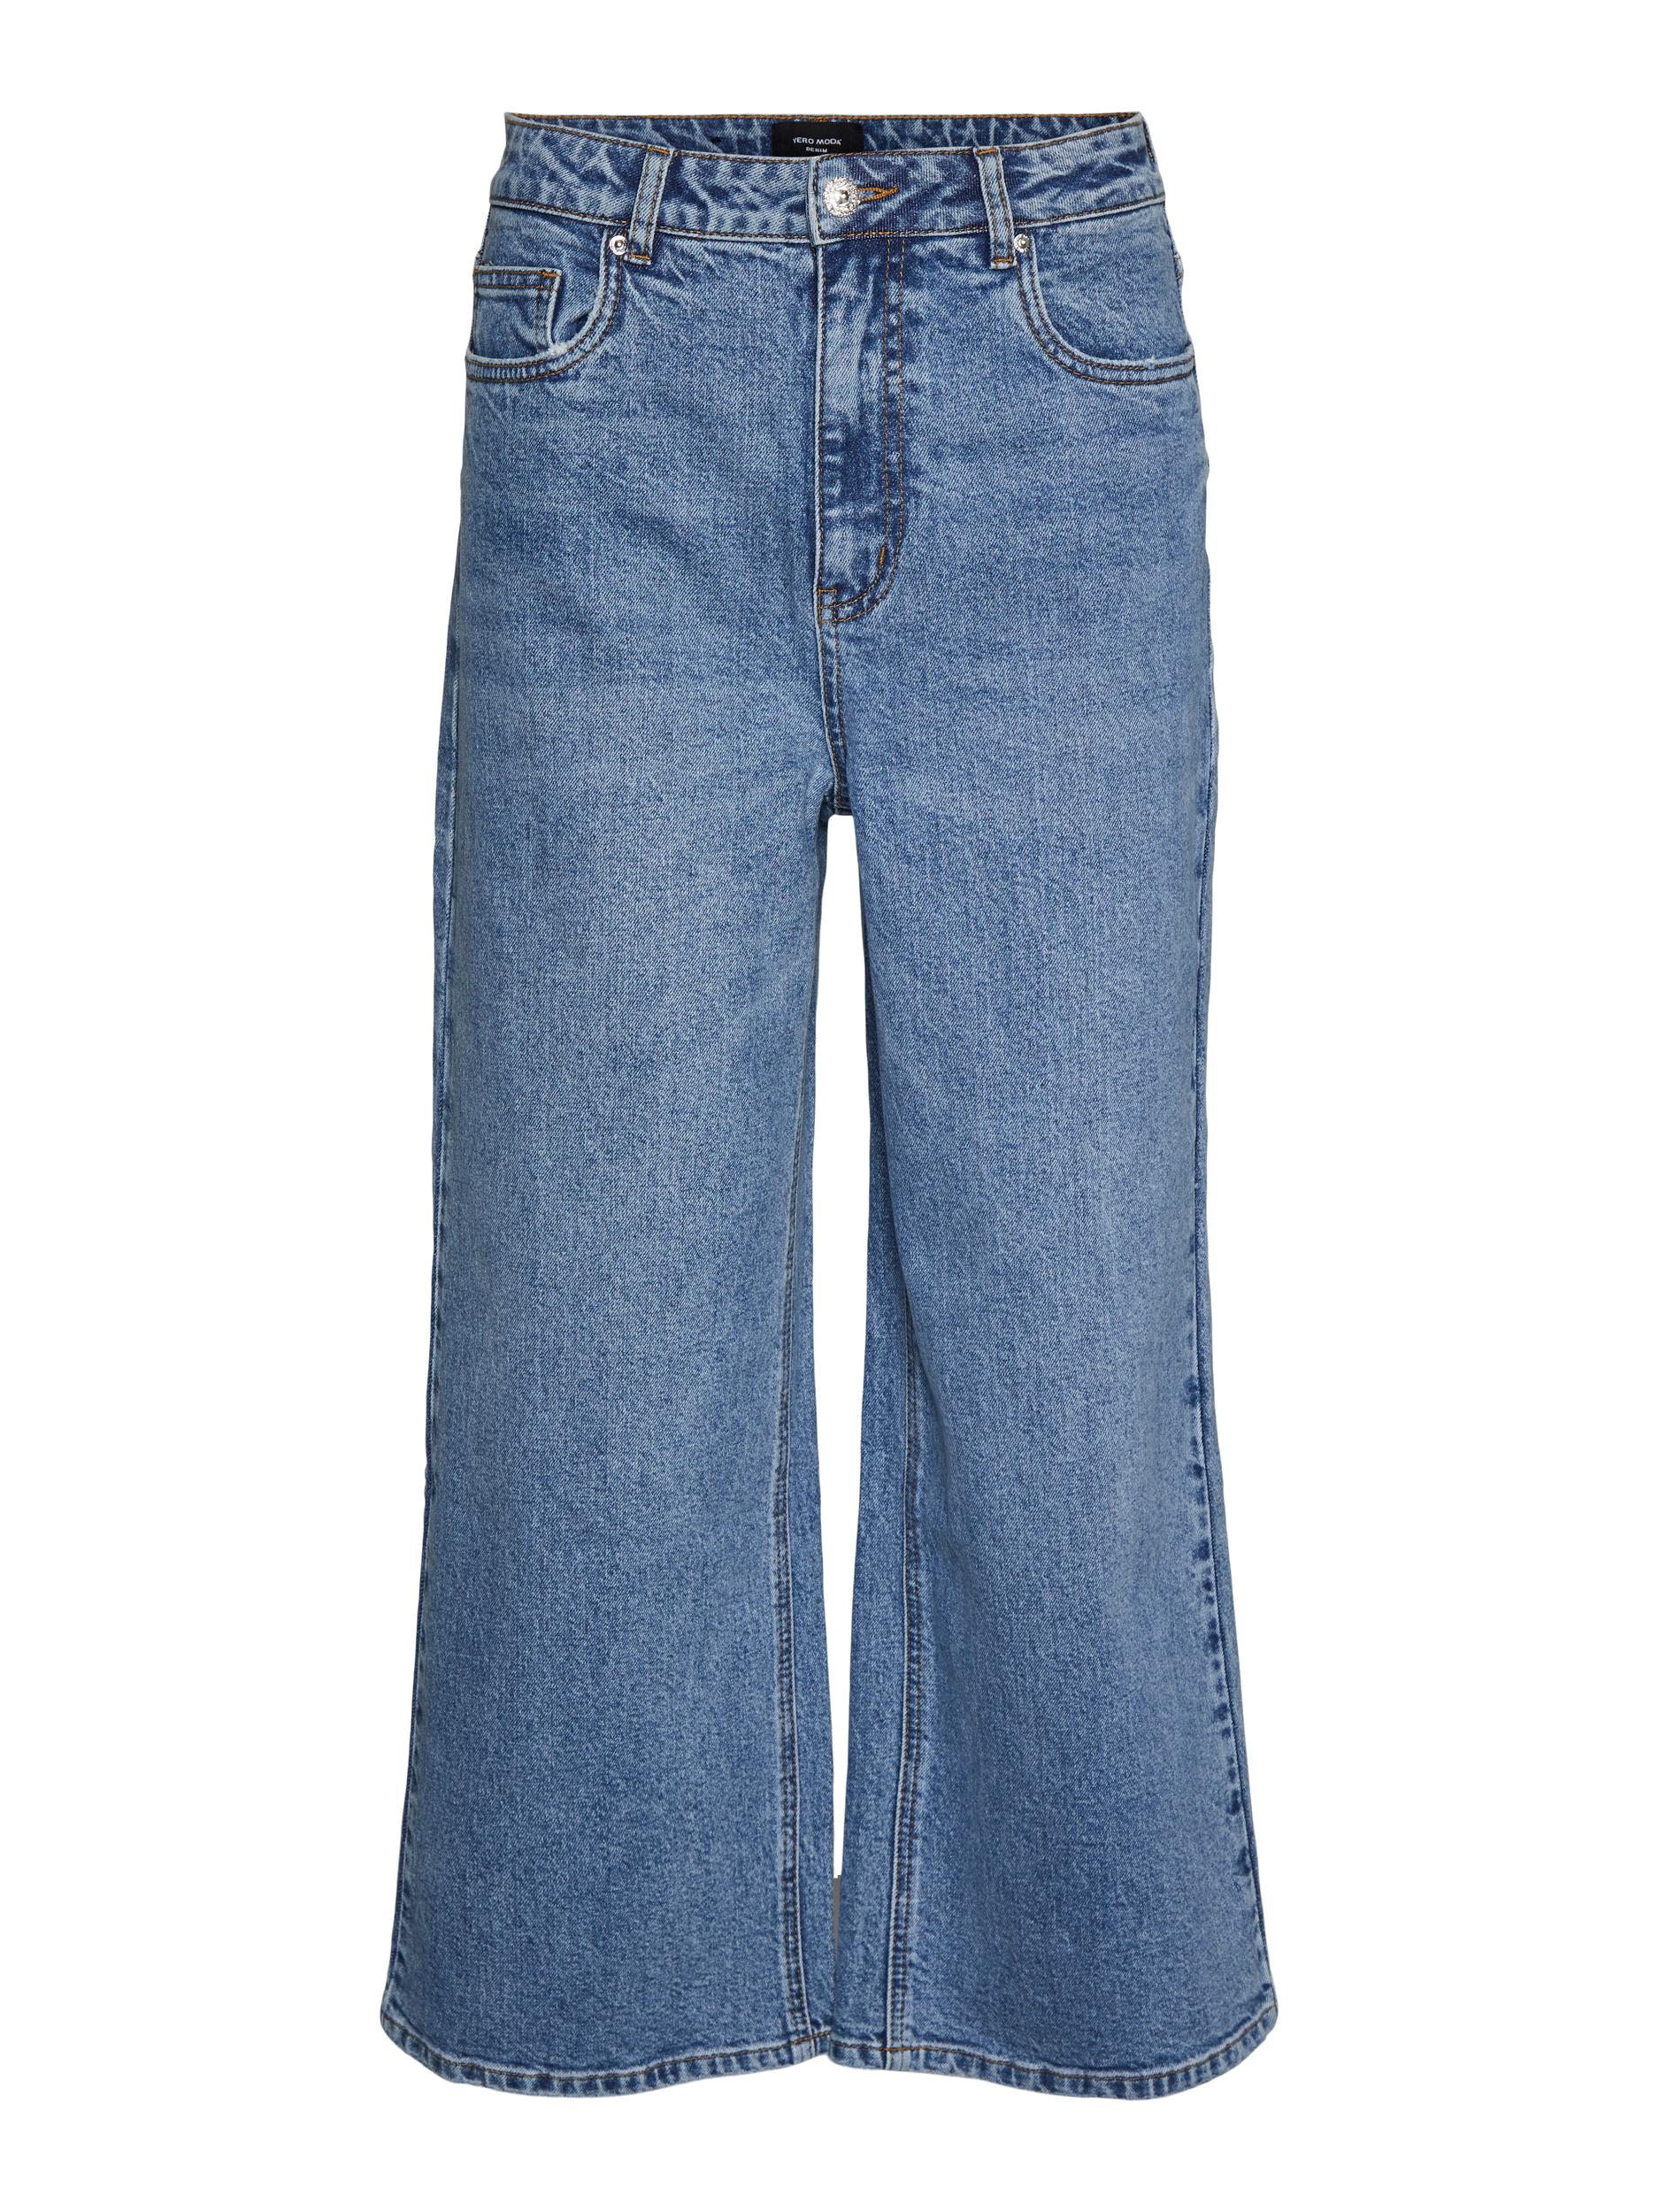 Vero Moda Kathy Jeans, Light Blue Denim, W32/L34